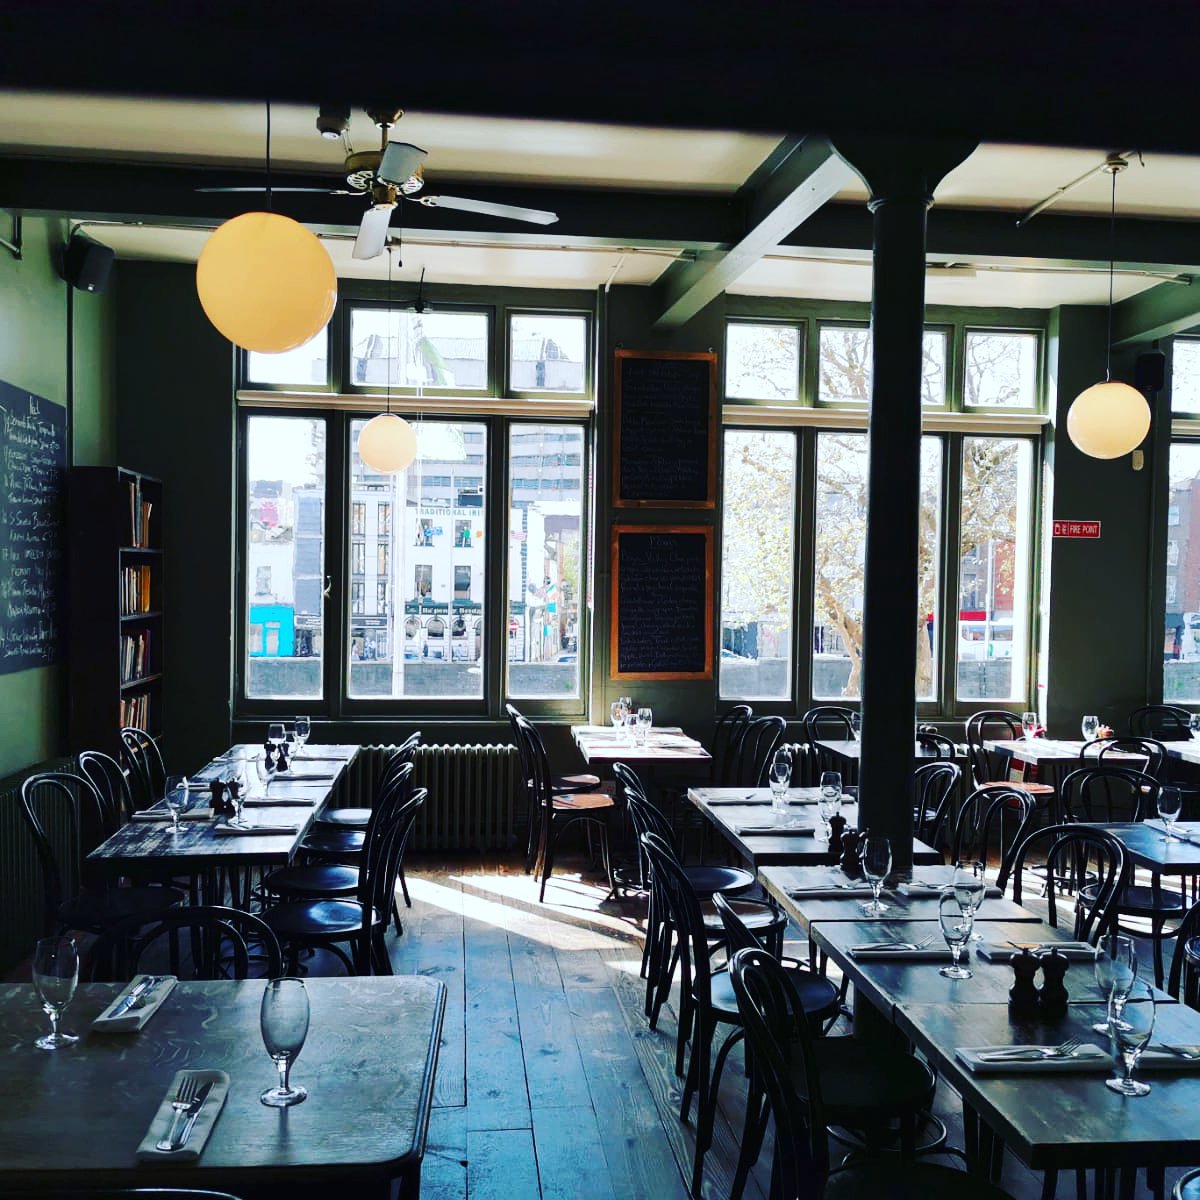 Ready and waiting for you. Sun dappling through our wall of glass....
#dublinshopfronts #dublin #visitireland🍀 #visitDublin #dublineats #dublindna #huffposttaste #igersfood #igrammers_ireland #food52grams #foodgrams #instafood #bloggersireland #Irishfood